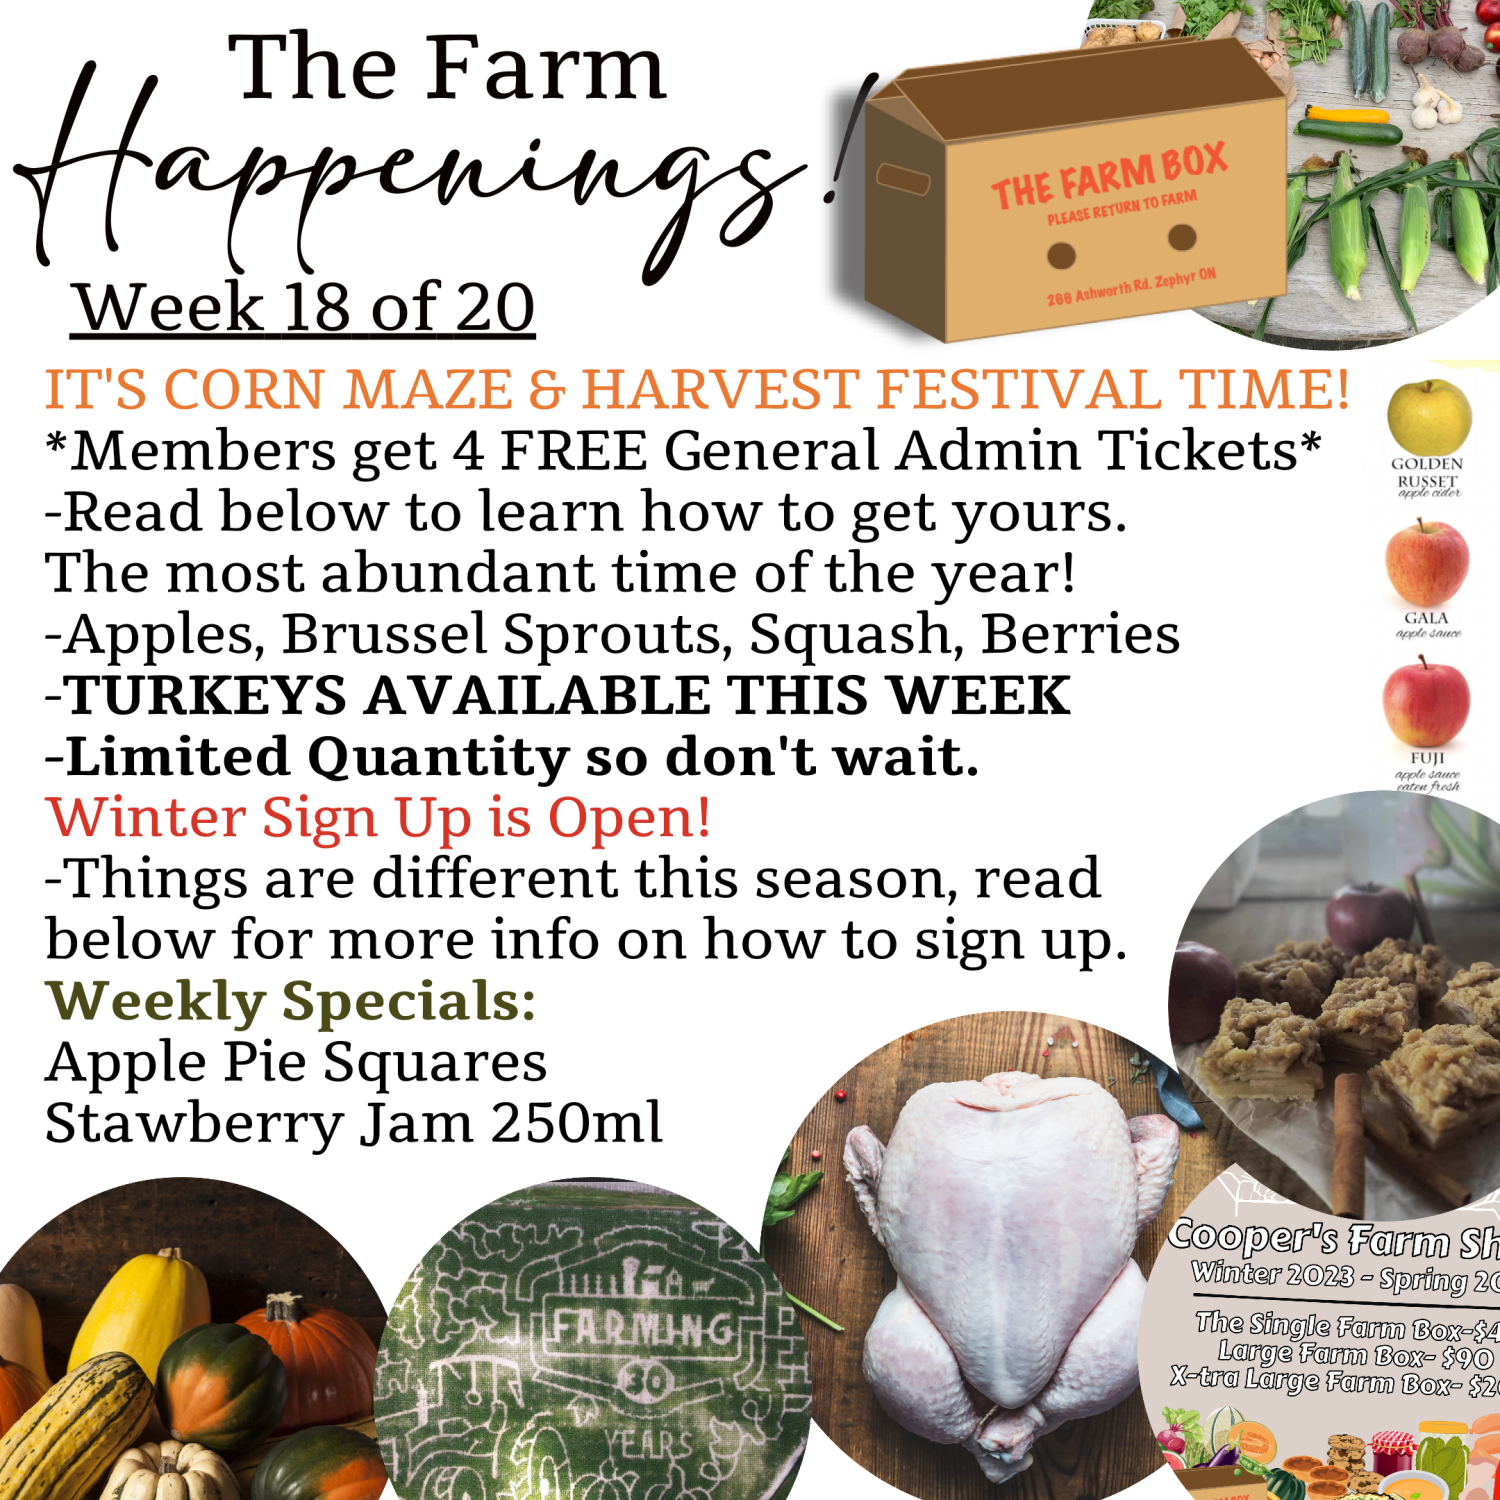 Next Happening: "The Farm Box"-Coopers CSA Farm Farm Happenings Week 18